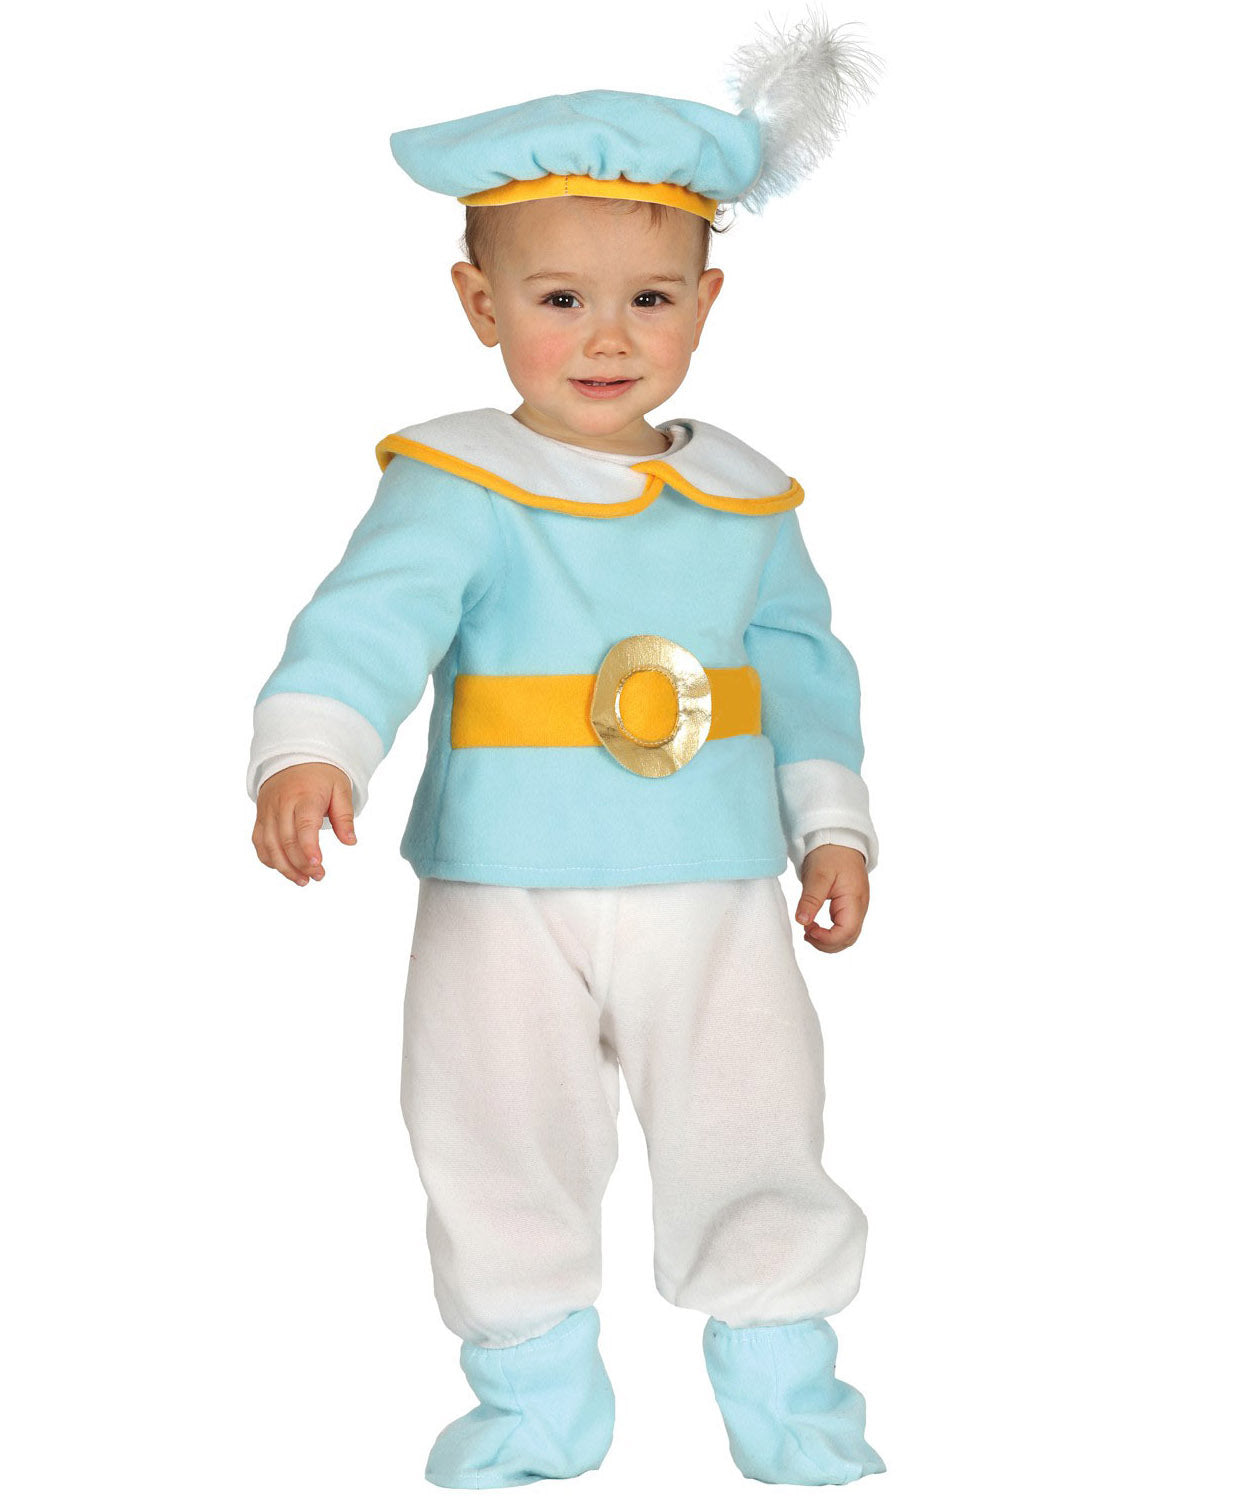 Baby Prince Costume